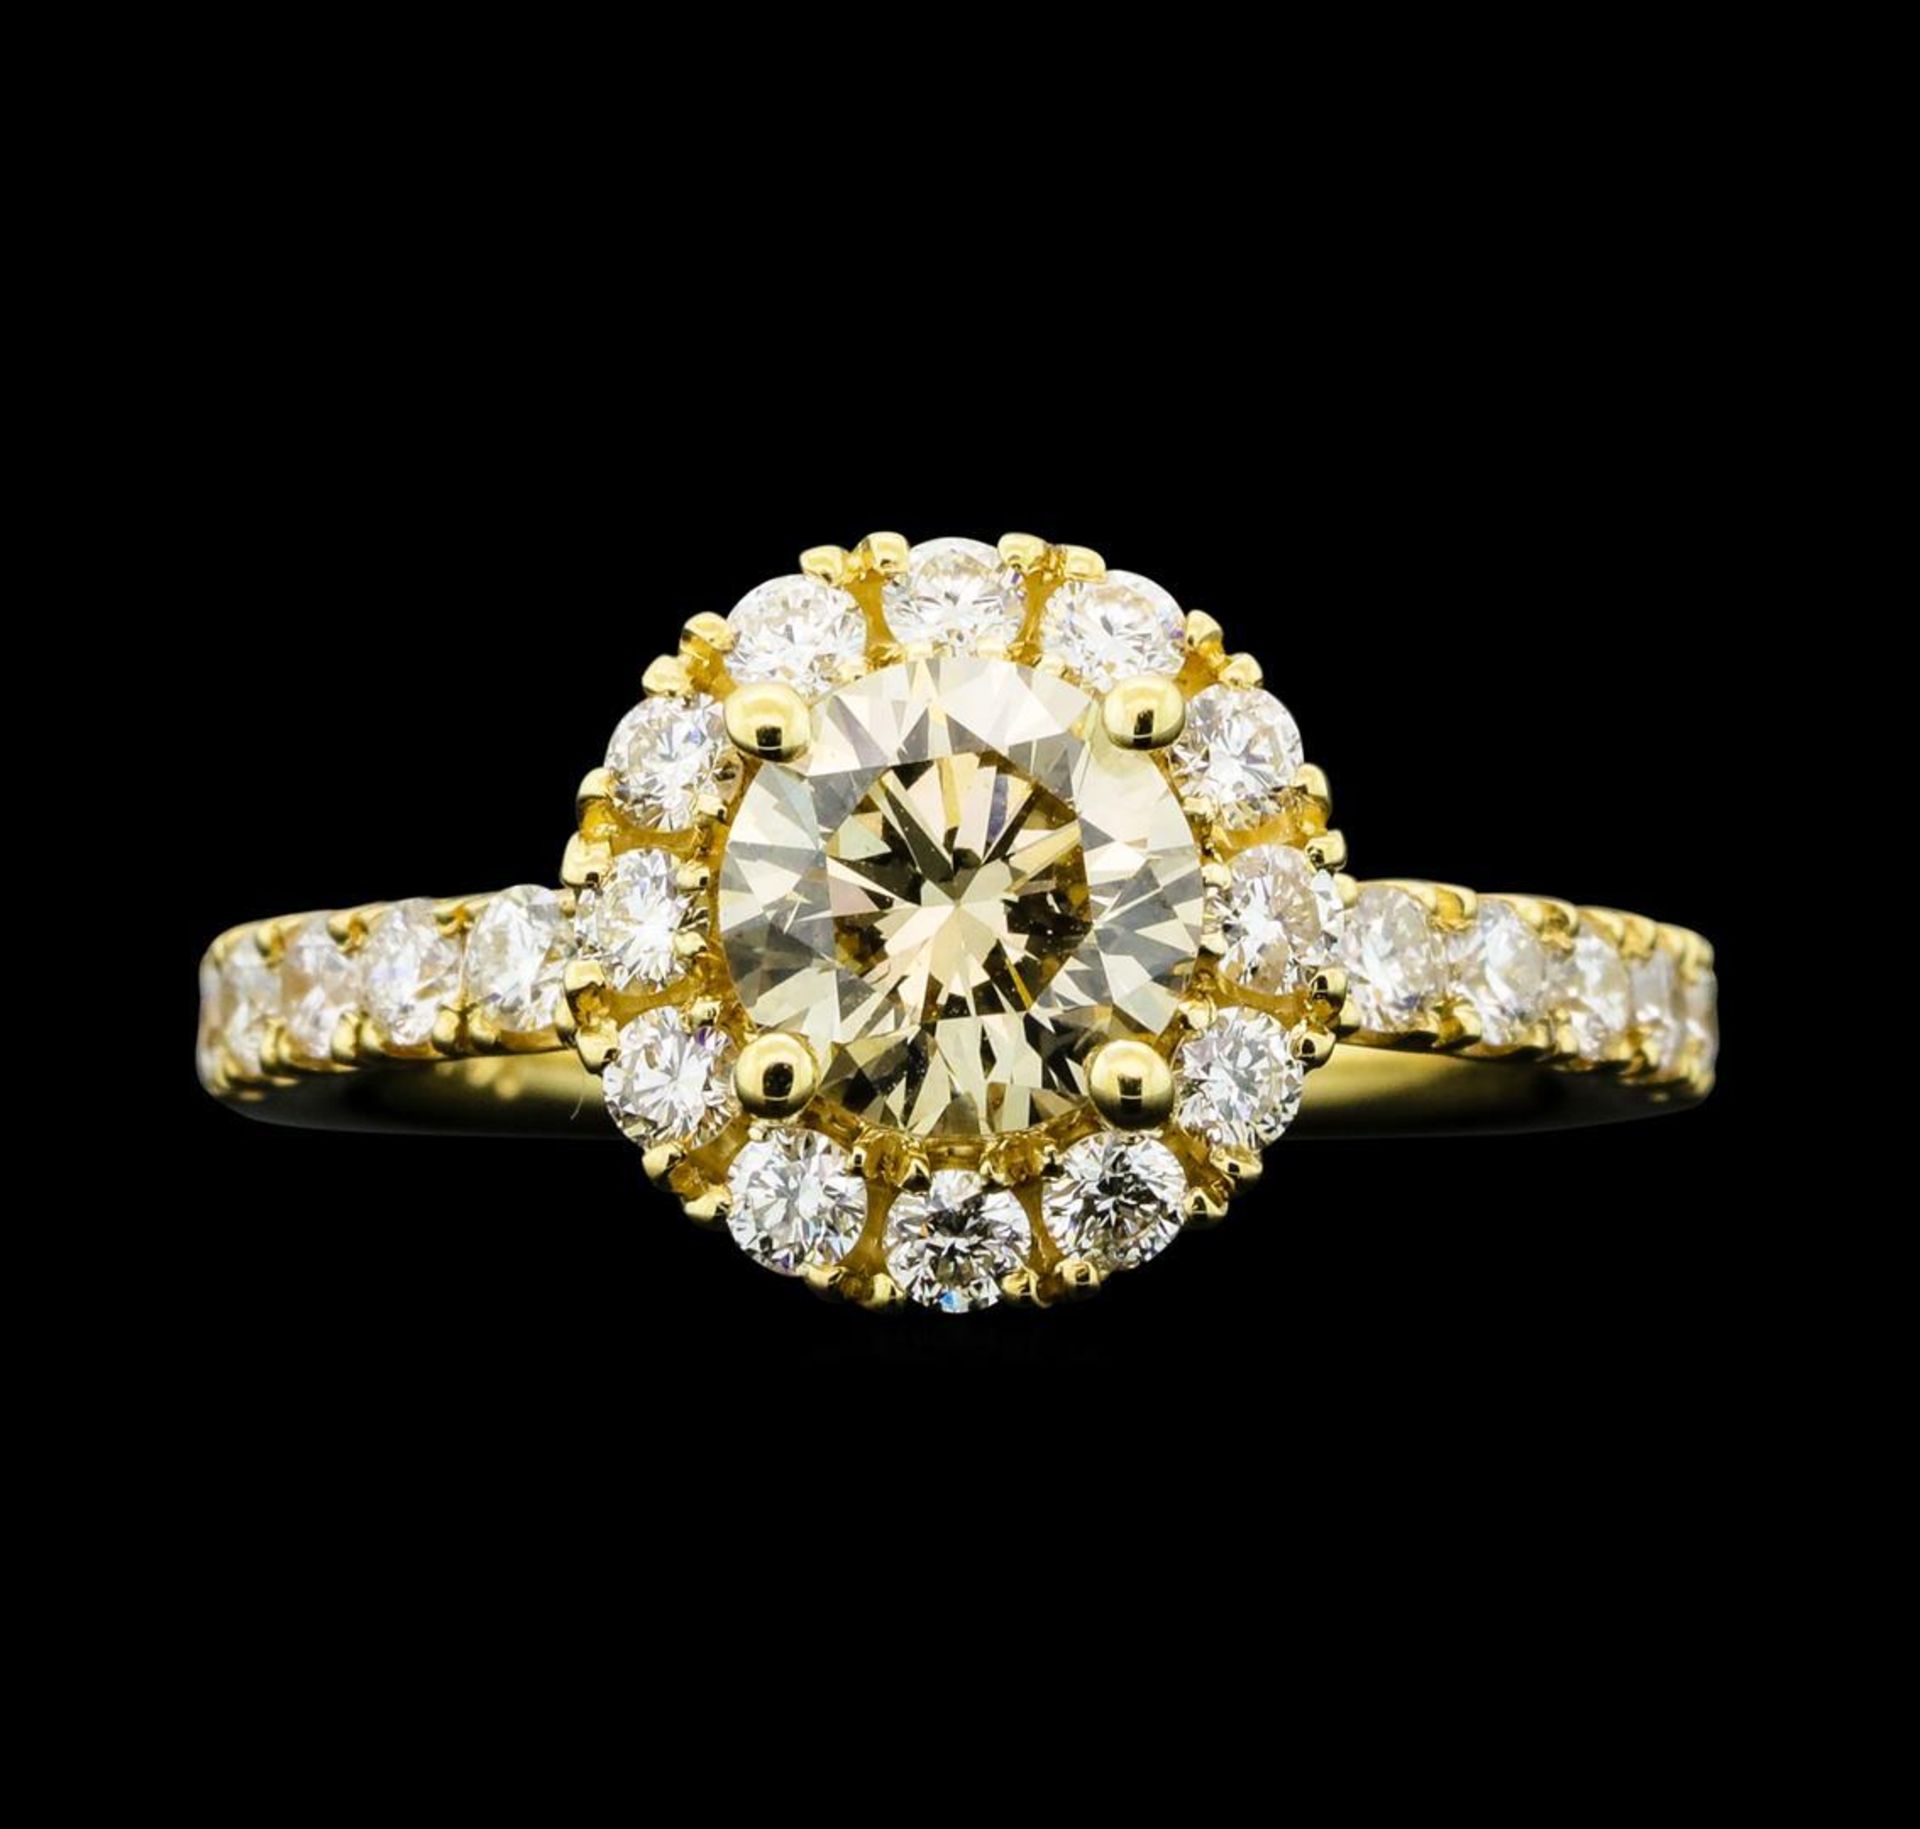 1.66 ctw Diamond Ring - 14KT Yellow Gold - Image 2 of 5